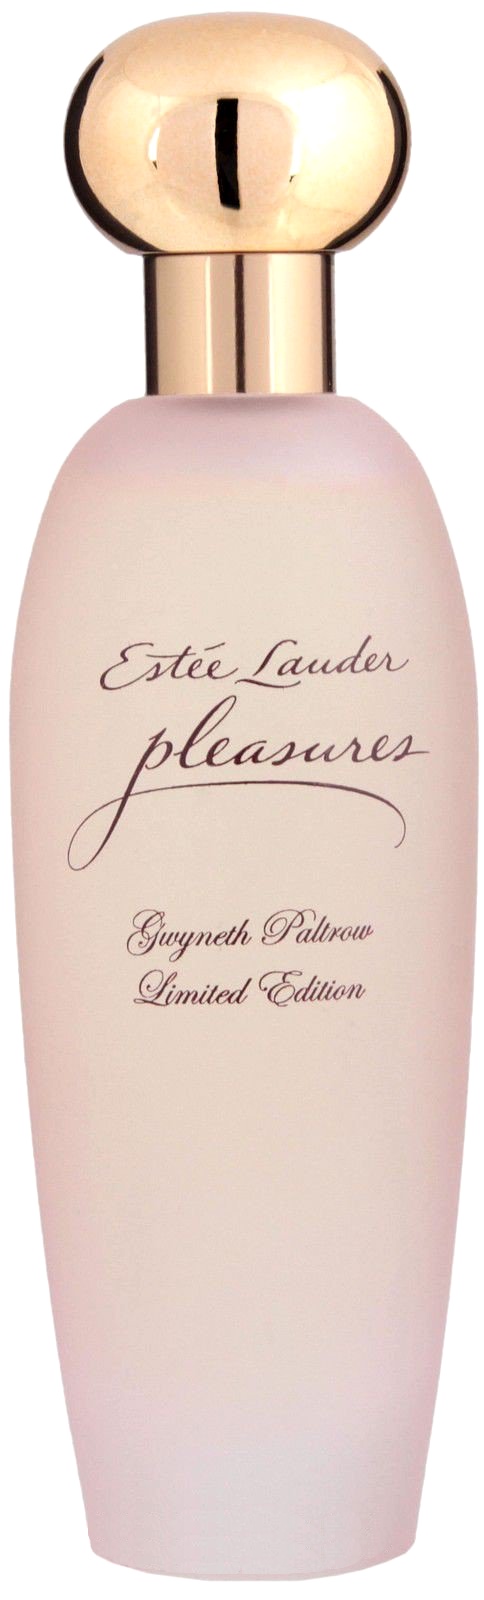 Estee Lauder Pleasures Gwyneth Paltrow Limited Edition